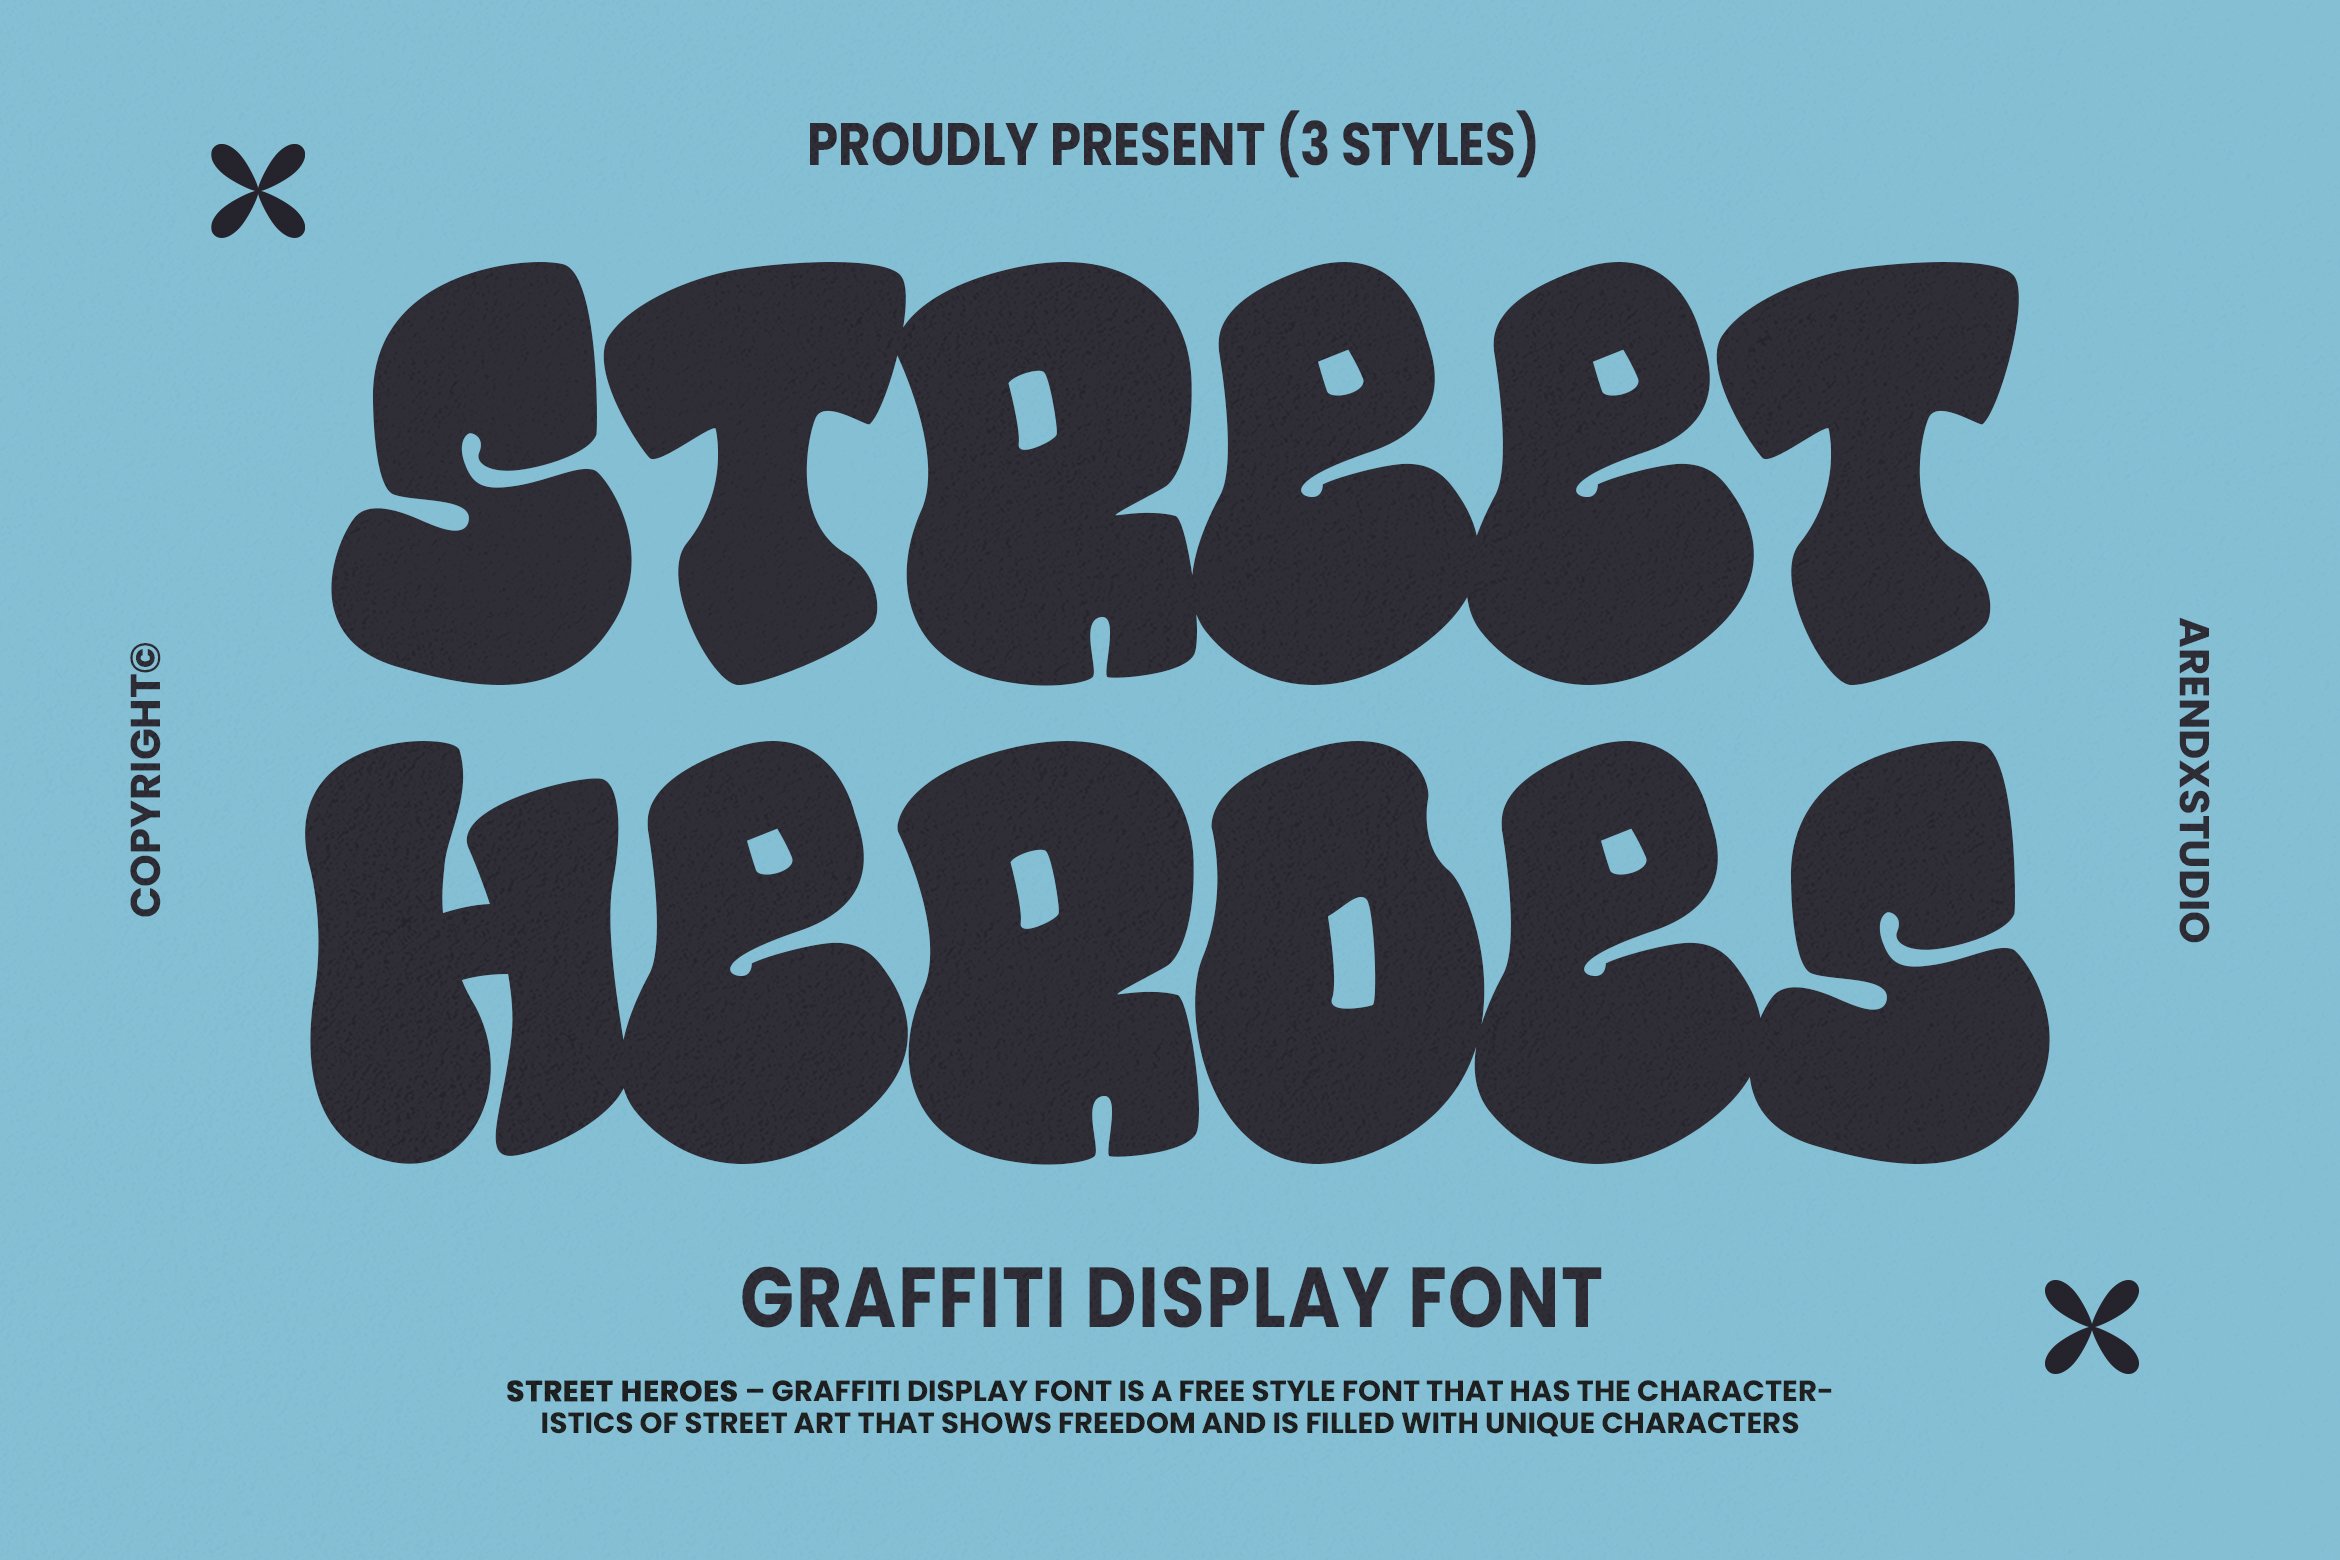 Street Heroes - Graffiti Font cover image.